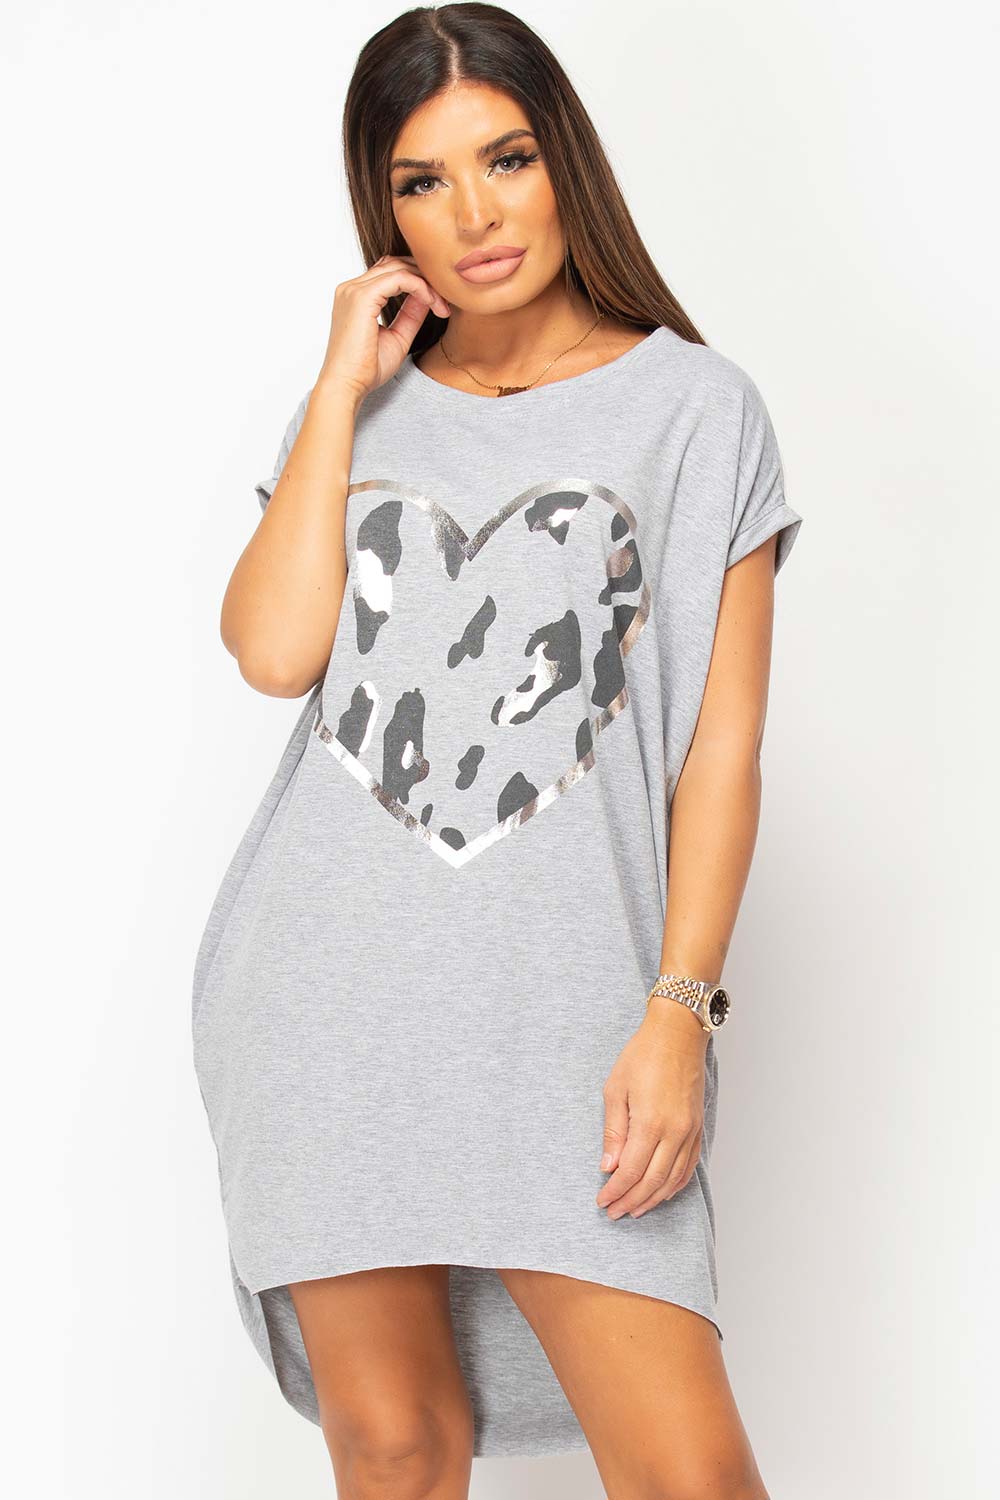 grey oversized t shirt dress womens 